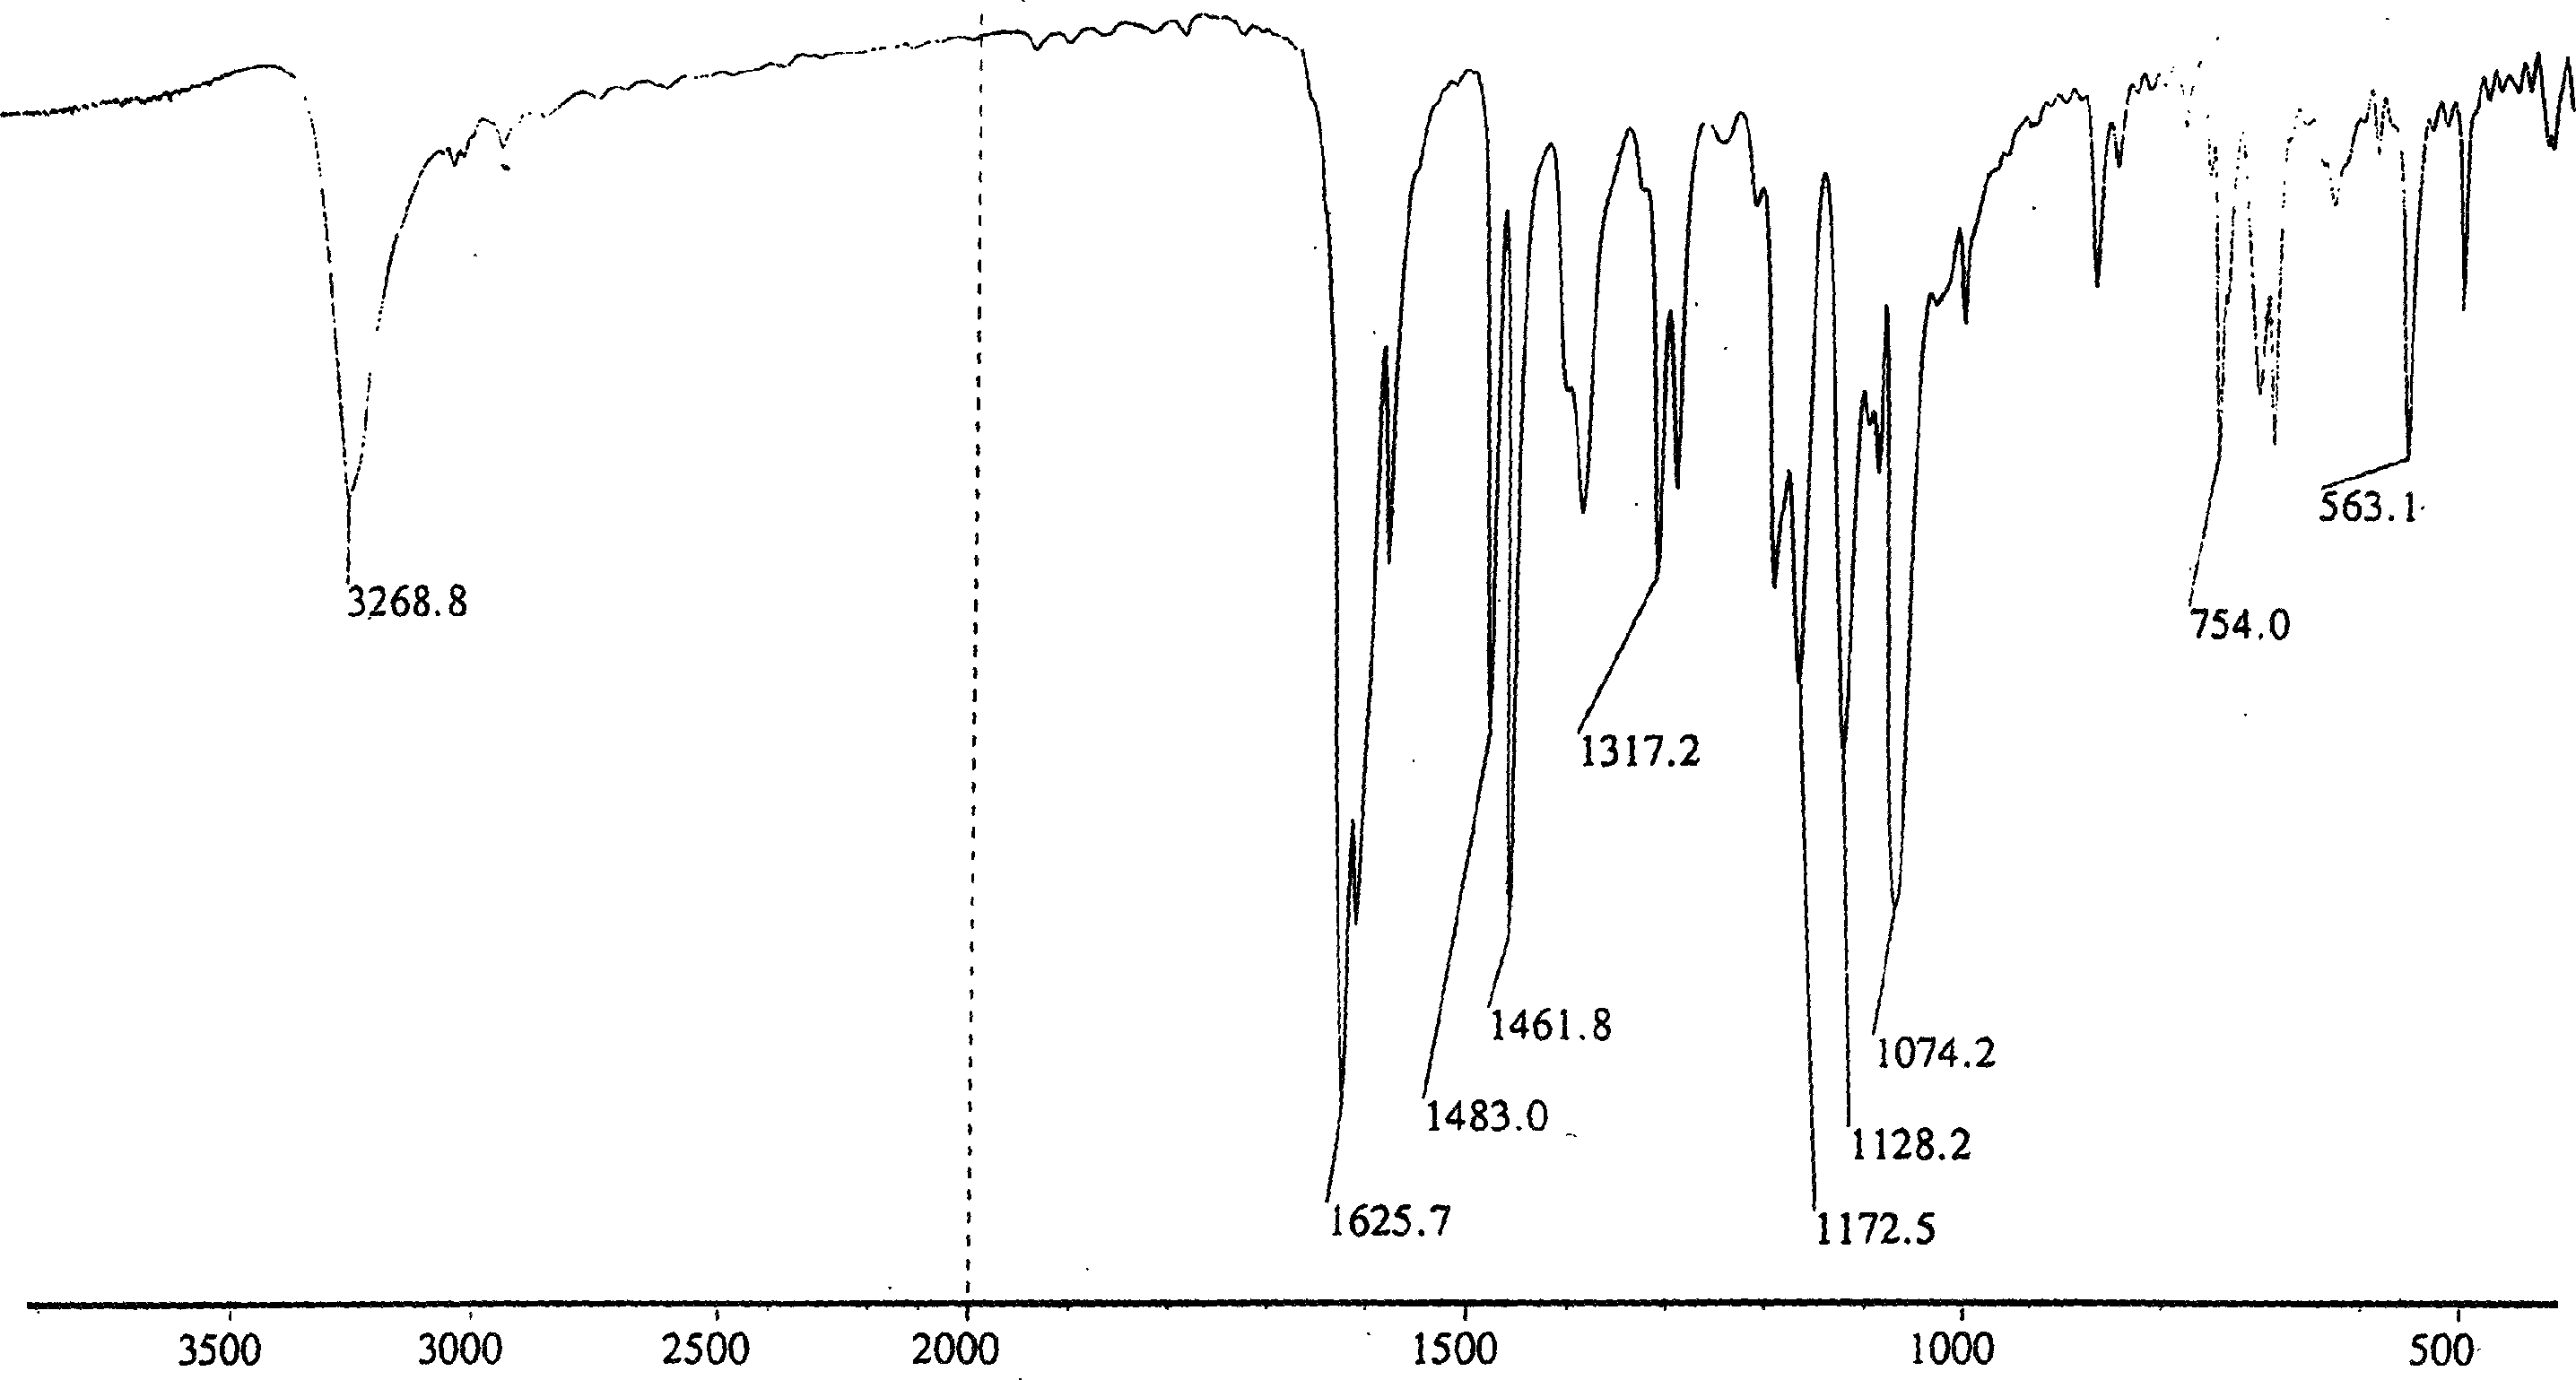 Usage of indophenol salt in direct dyeing in situ